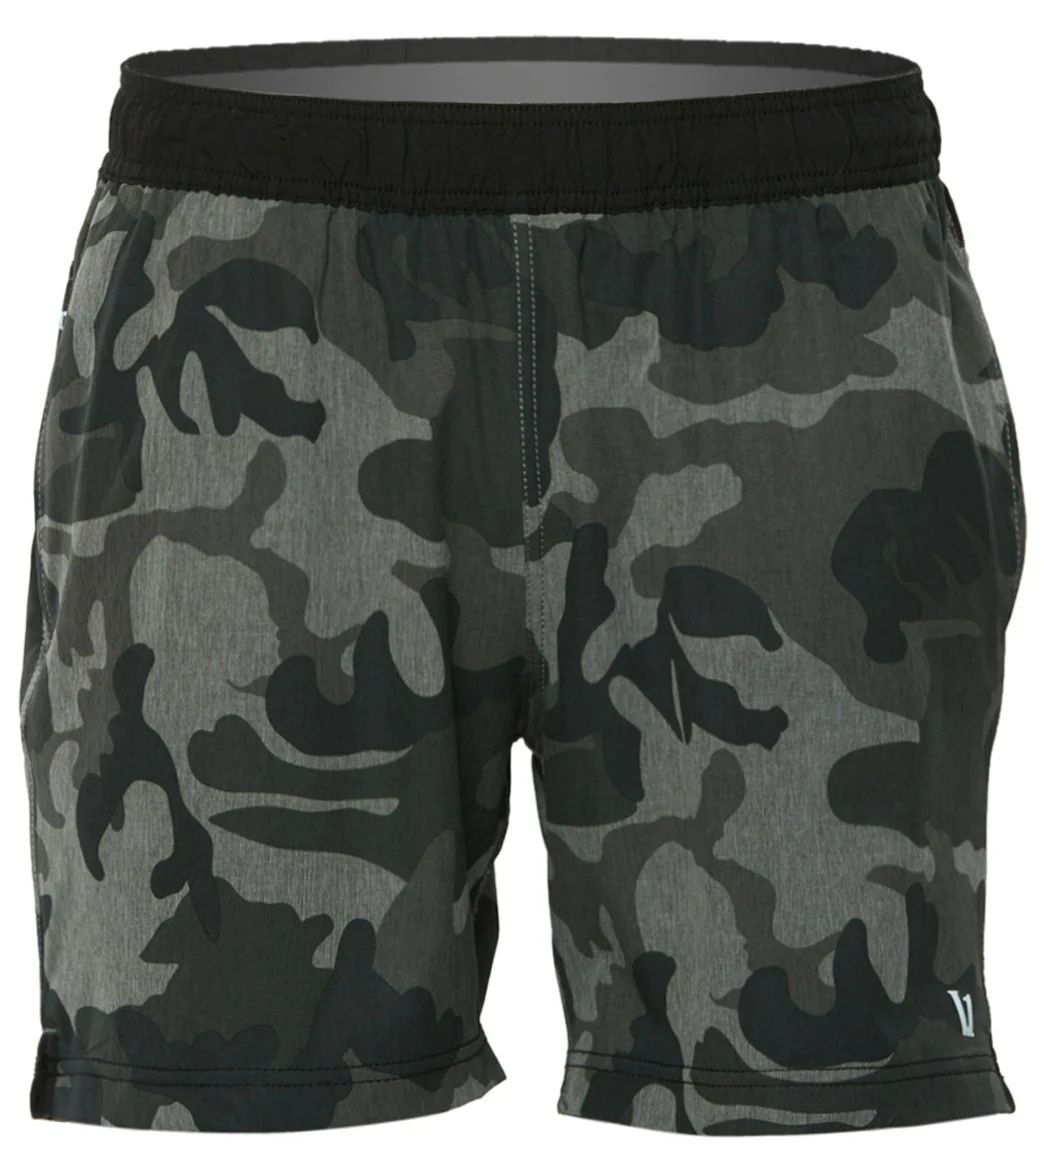 Vuori Men's Rush Yoga Shorts - Camo Grey Large Polyester/Elastane Moisture Wicking | YogaOutlet.com